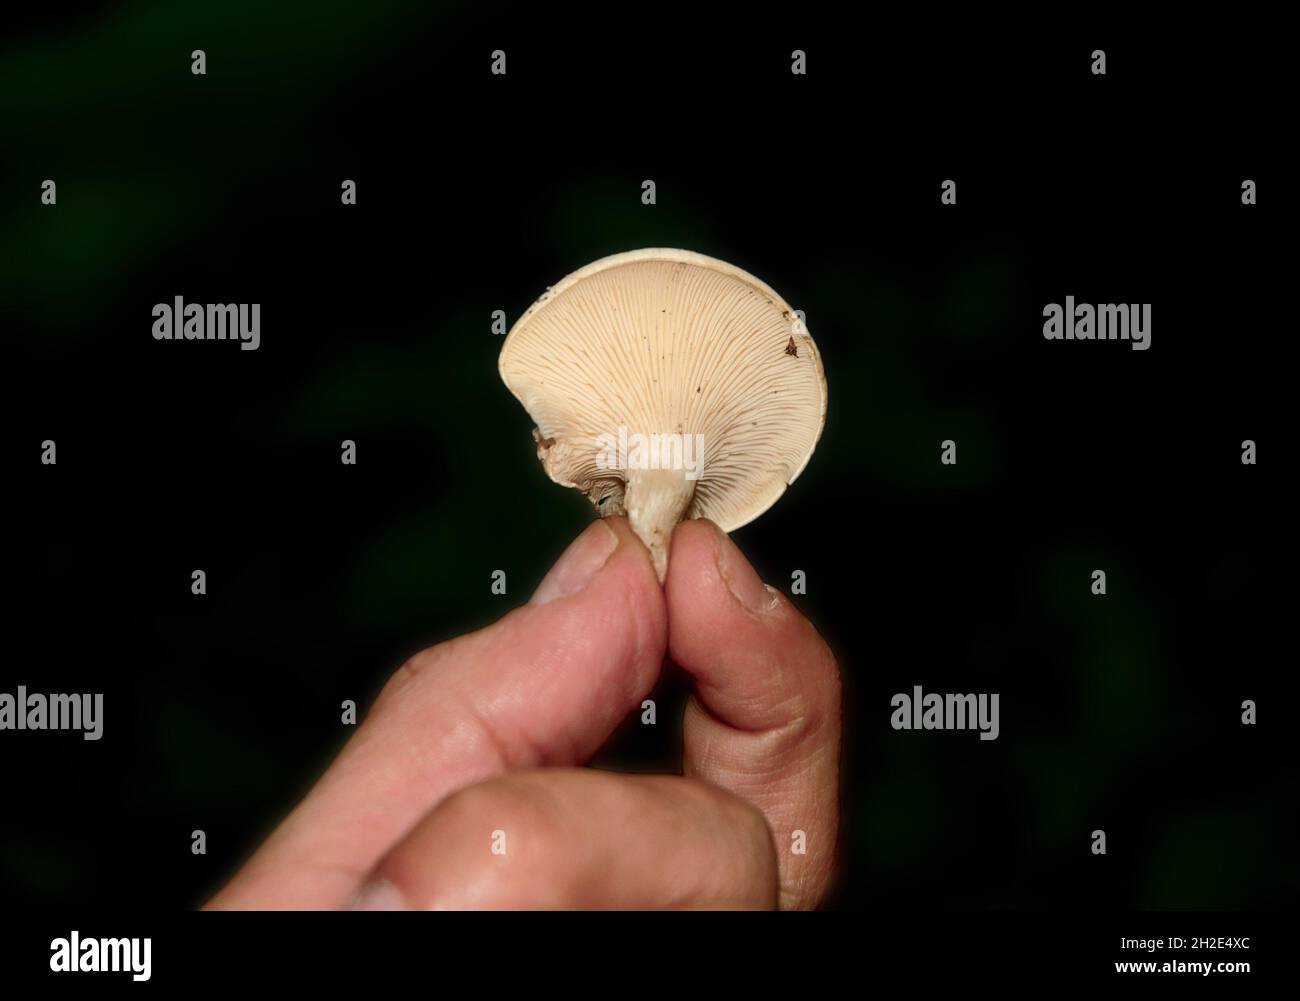 Close-up shot of a hand holding a mushroom Hygrophorus penarius. Stock Photo